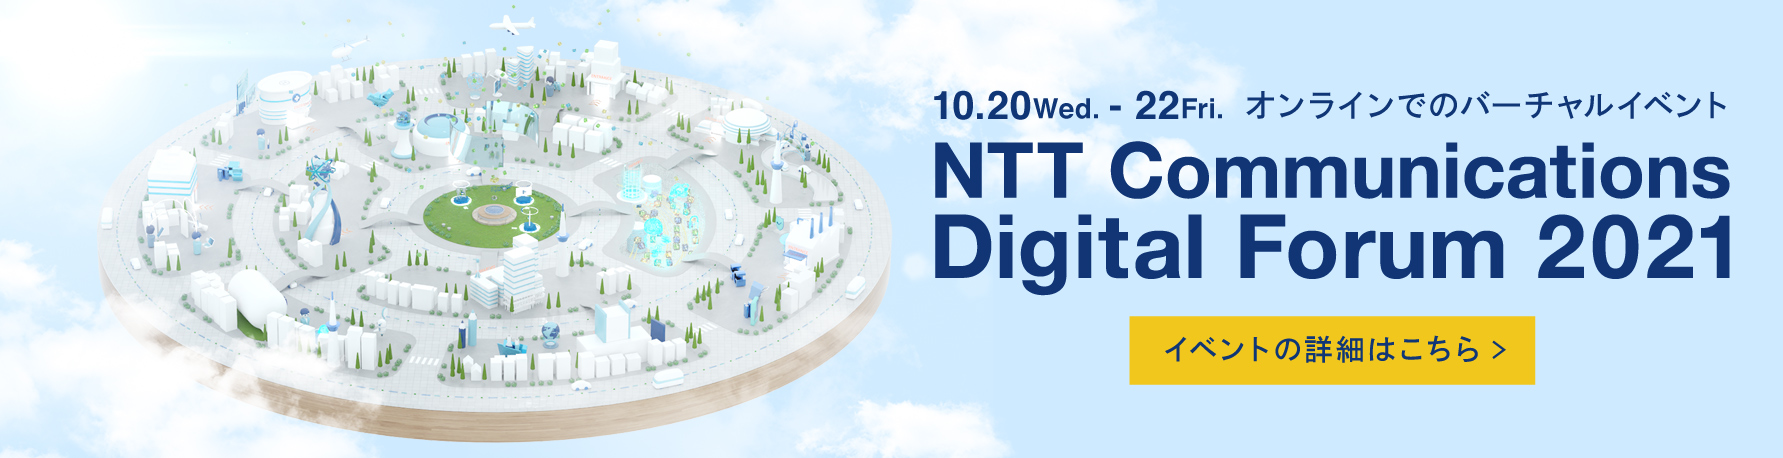 NTT Communications Digital Forum 2021